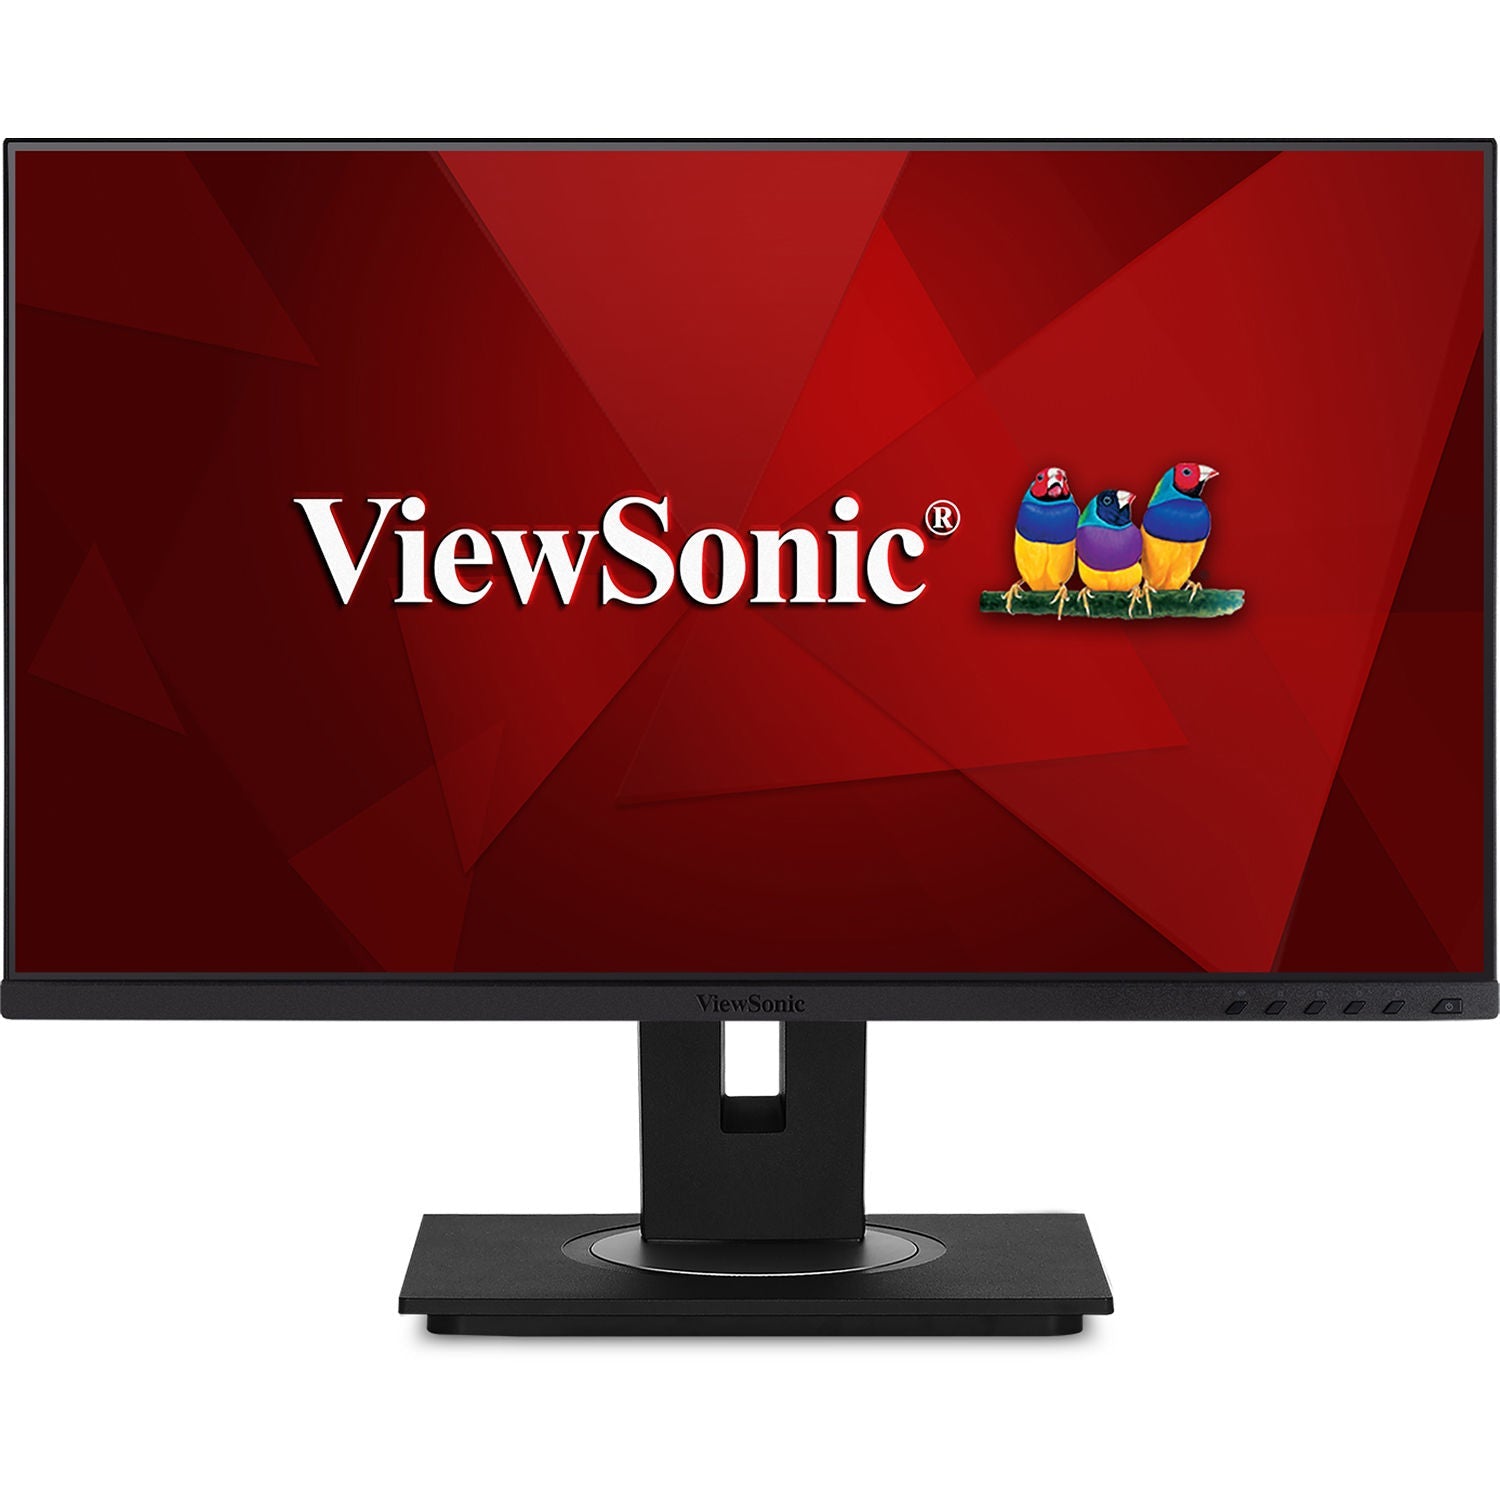 ViewSonic VG2455-R 24" 16:9 IPS Monitor - C Grade Refurbished